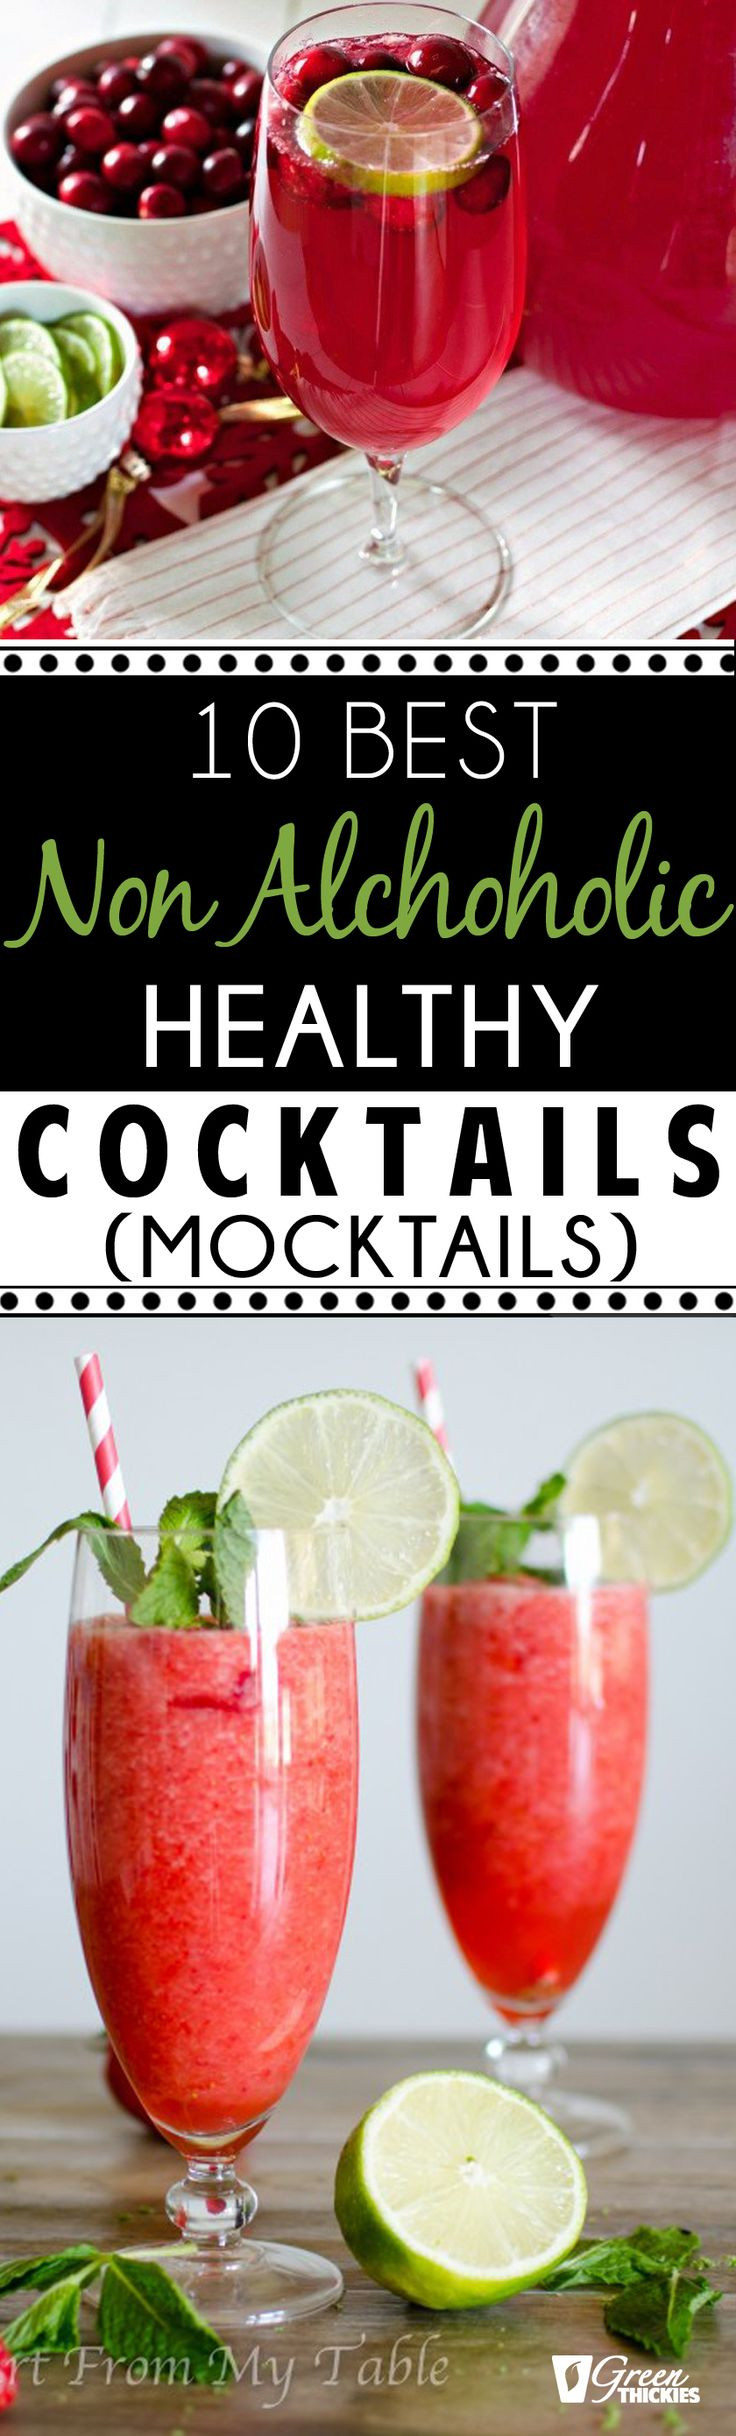 Healthy Vodka Drinks
 Best 25 Healthy cocktails ideas on Pinterest